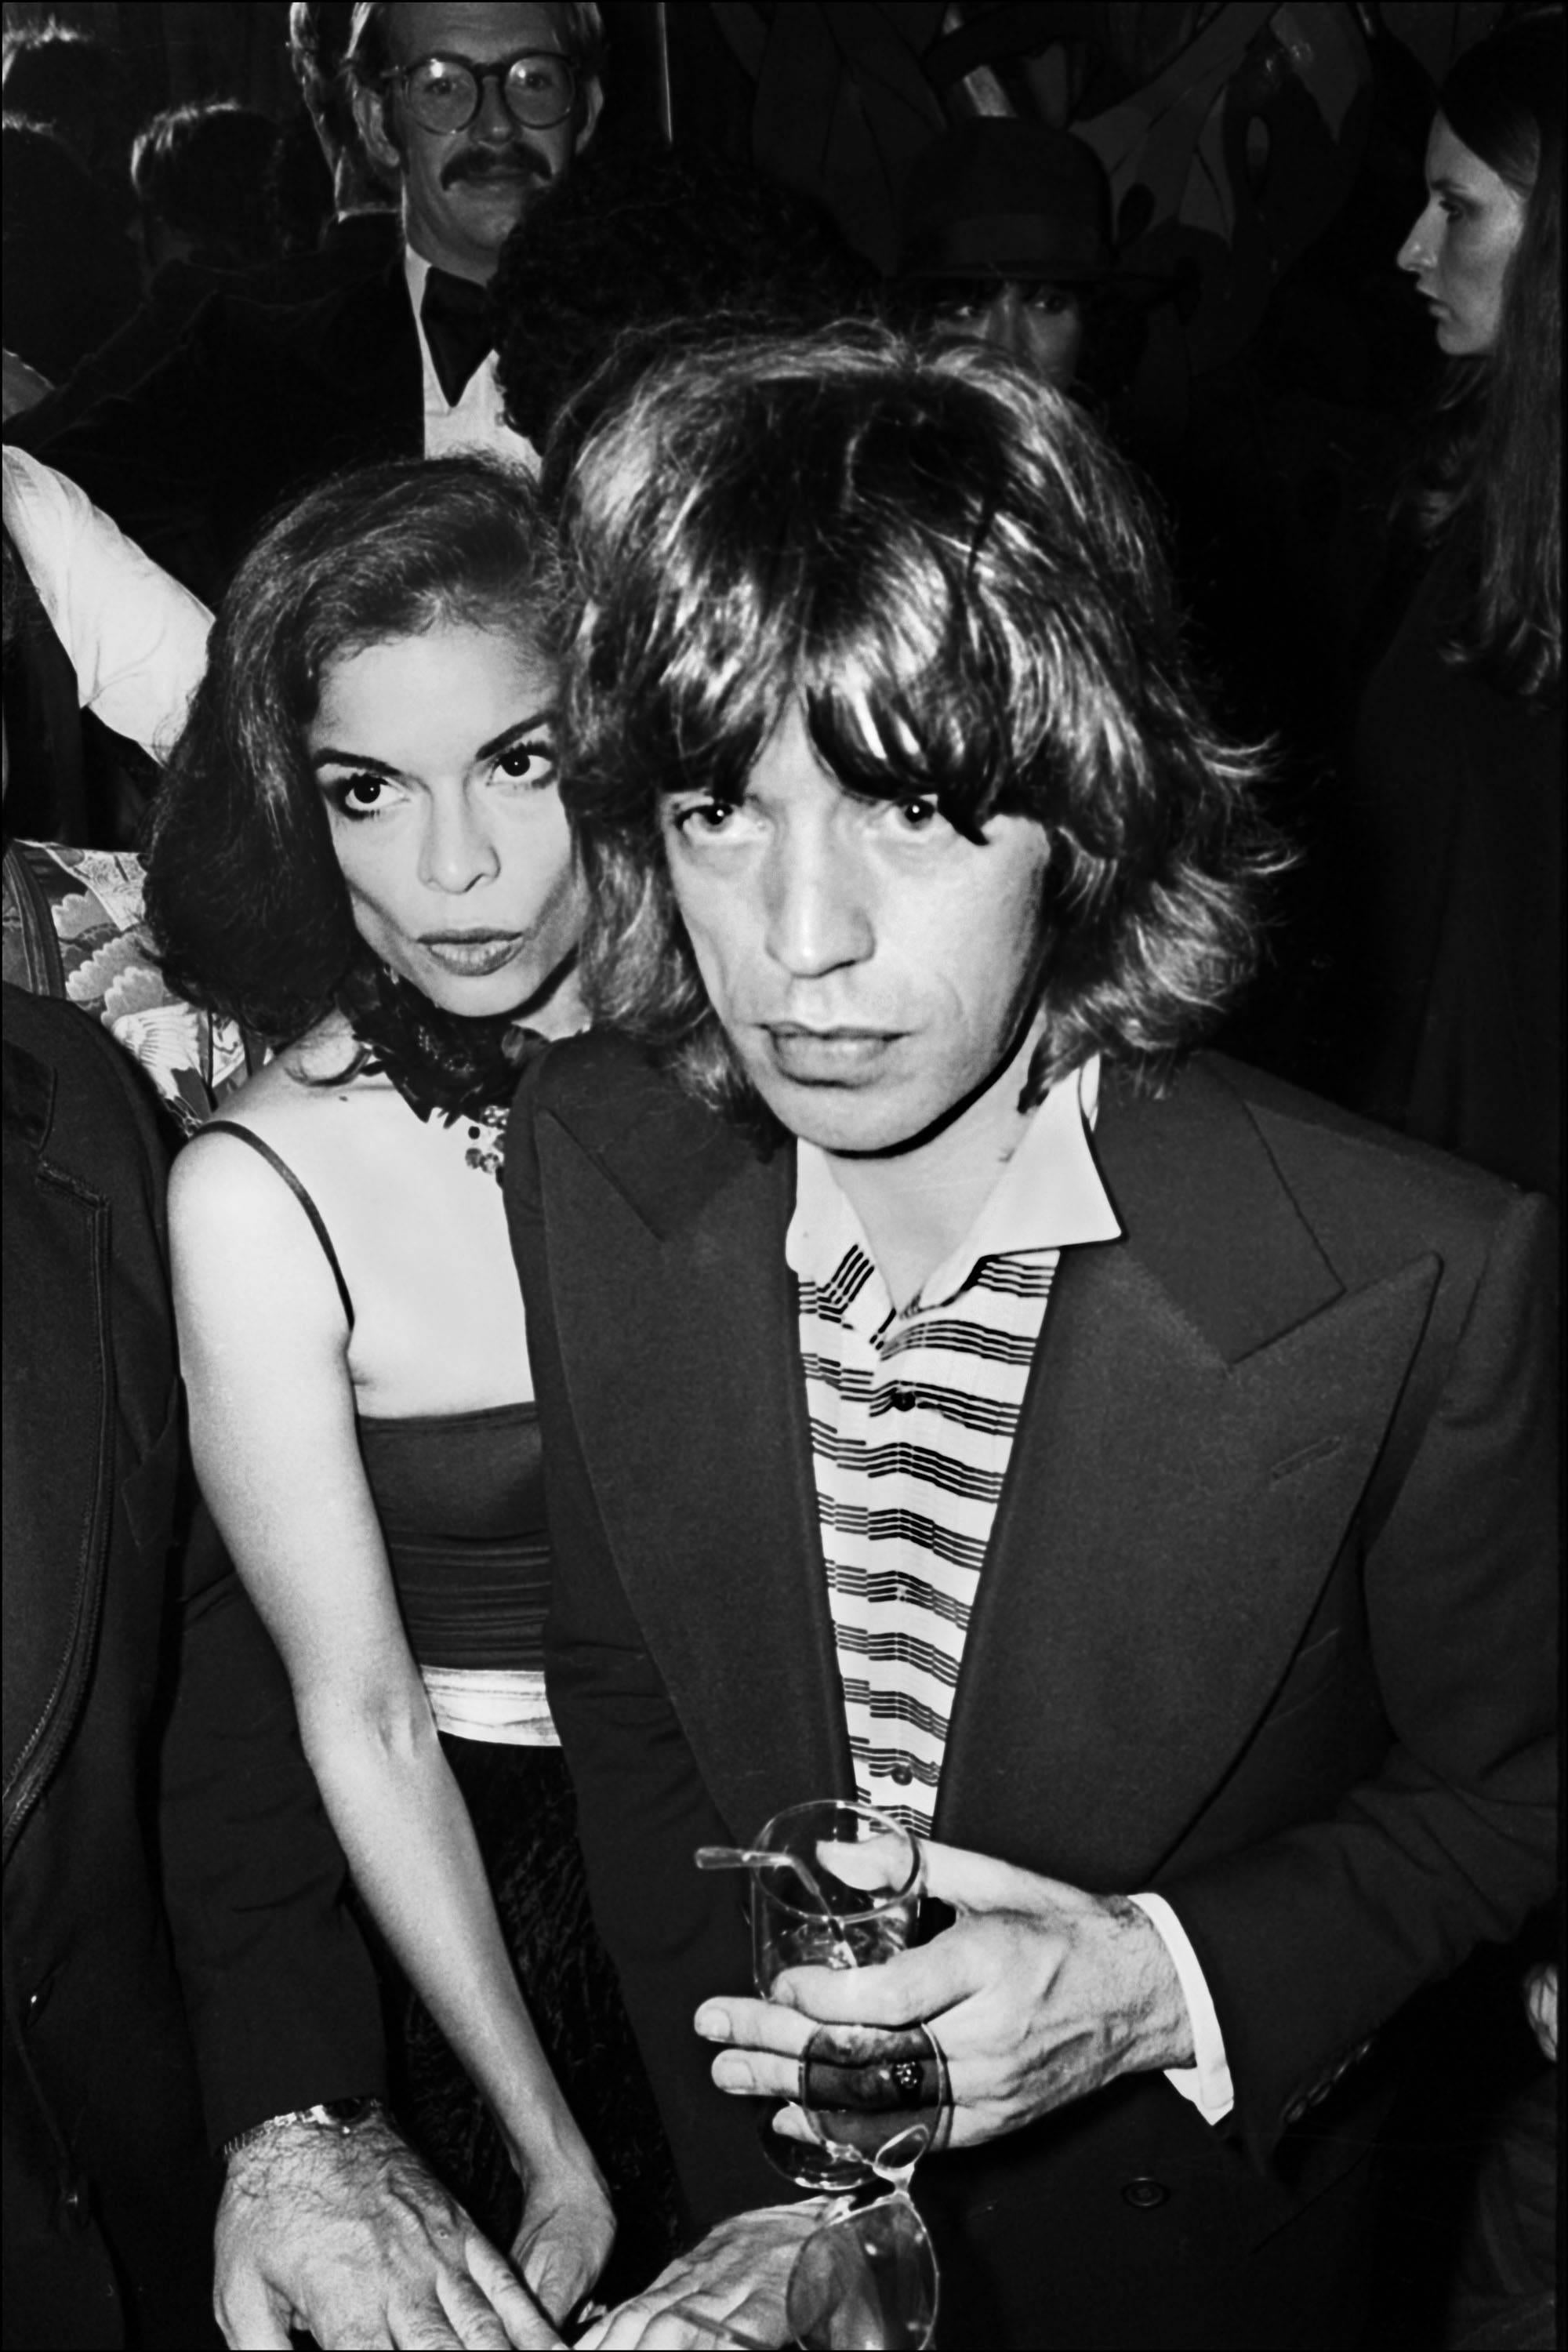 Allan Tannenbaum Black and White Photograph - Bianca and Mick Jagger, 1976